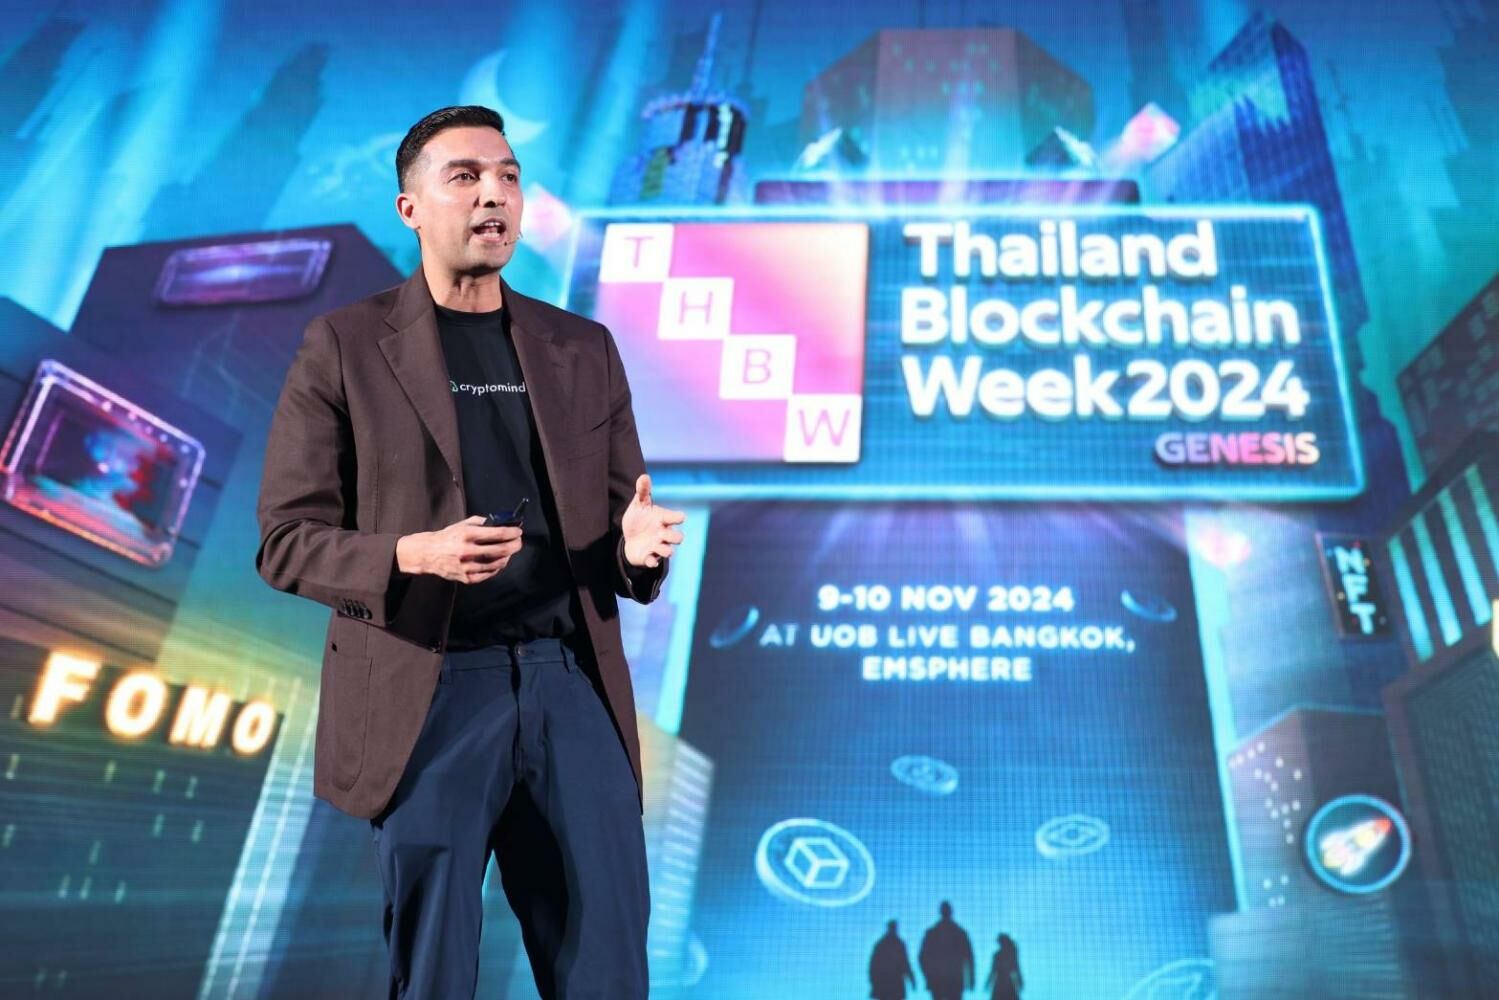 Cryptomind group aims to triple AUM to 3 billion baht amid crypto rebound